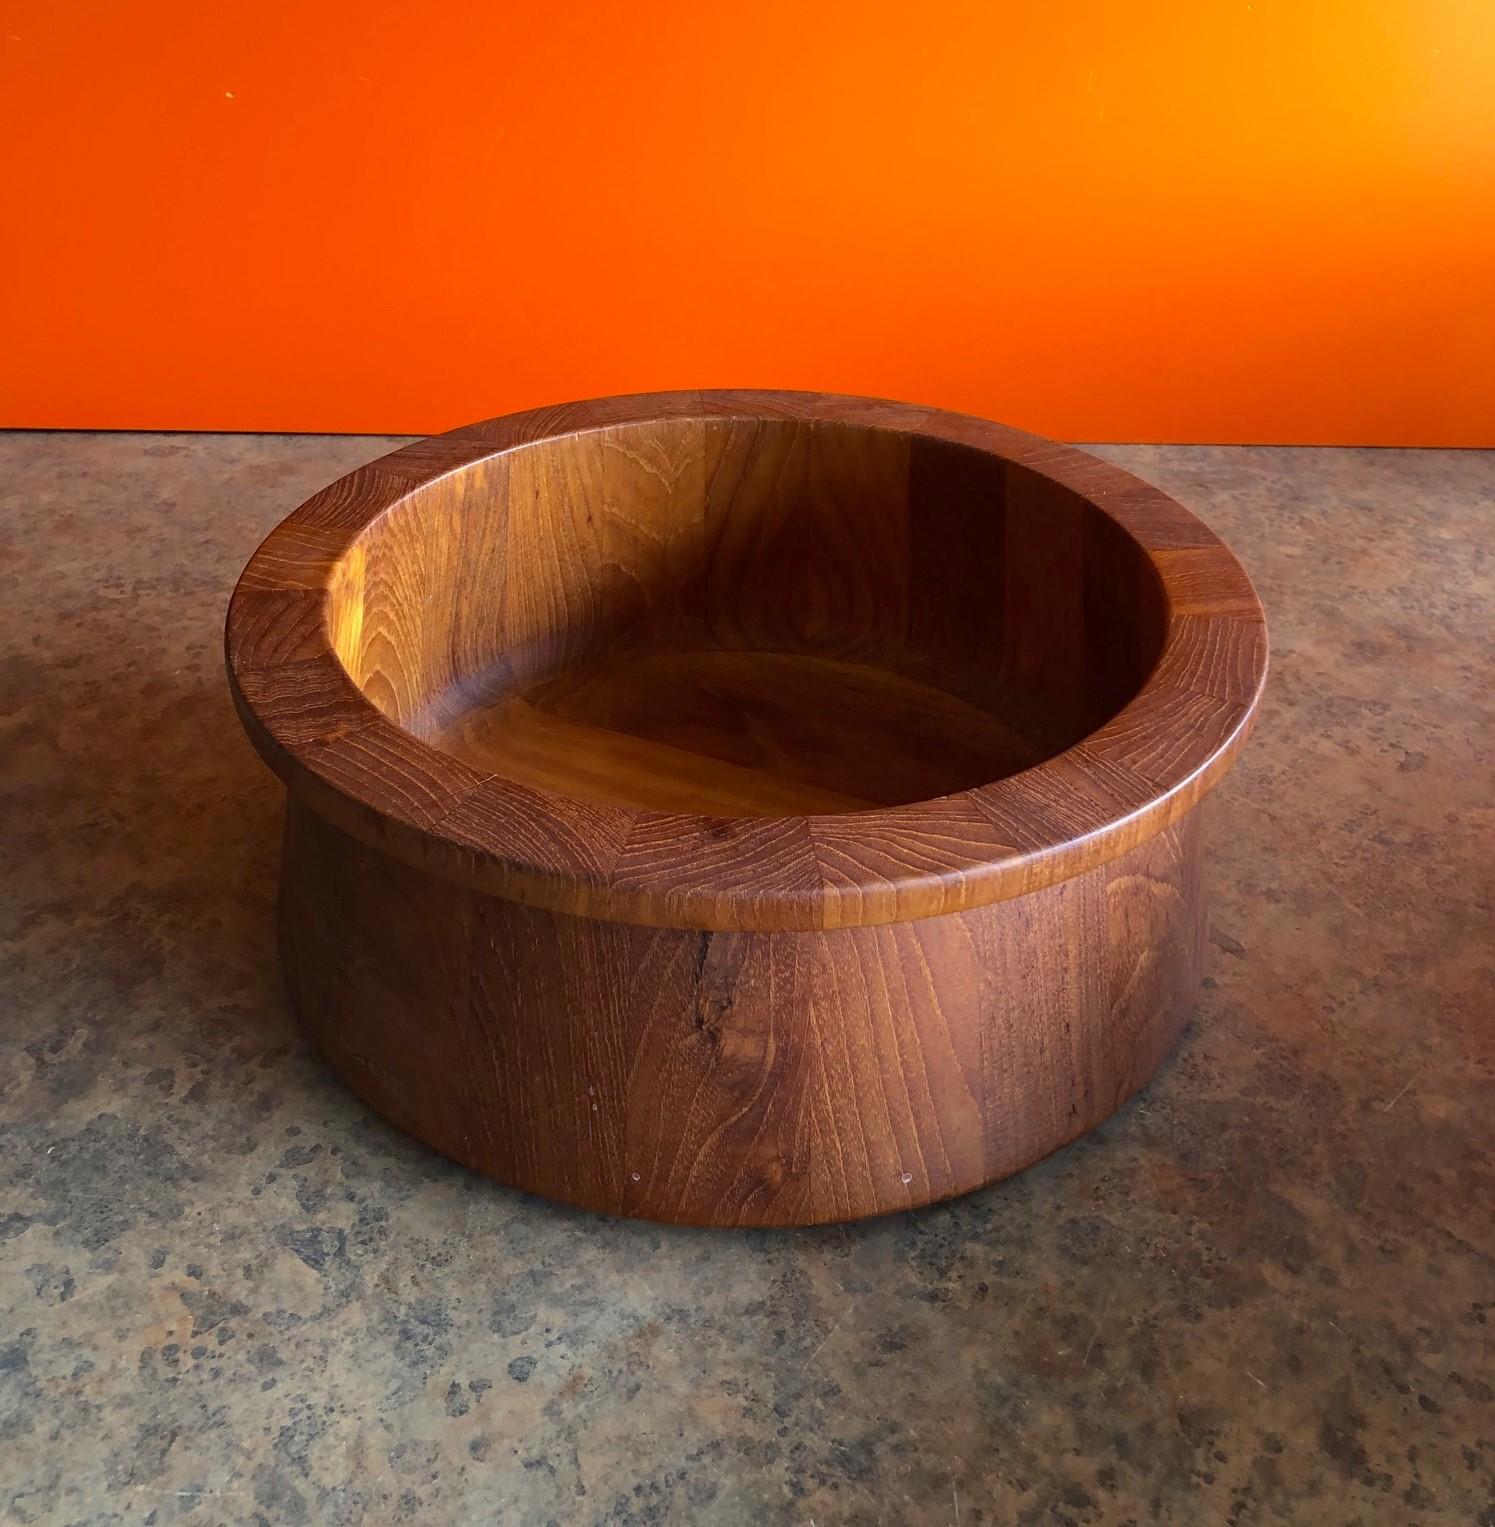 20th Century Danish Modern Staved Teak Bowl by Jens Quistgaard for Dansk For Sale